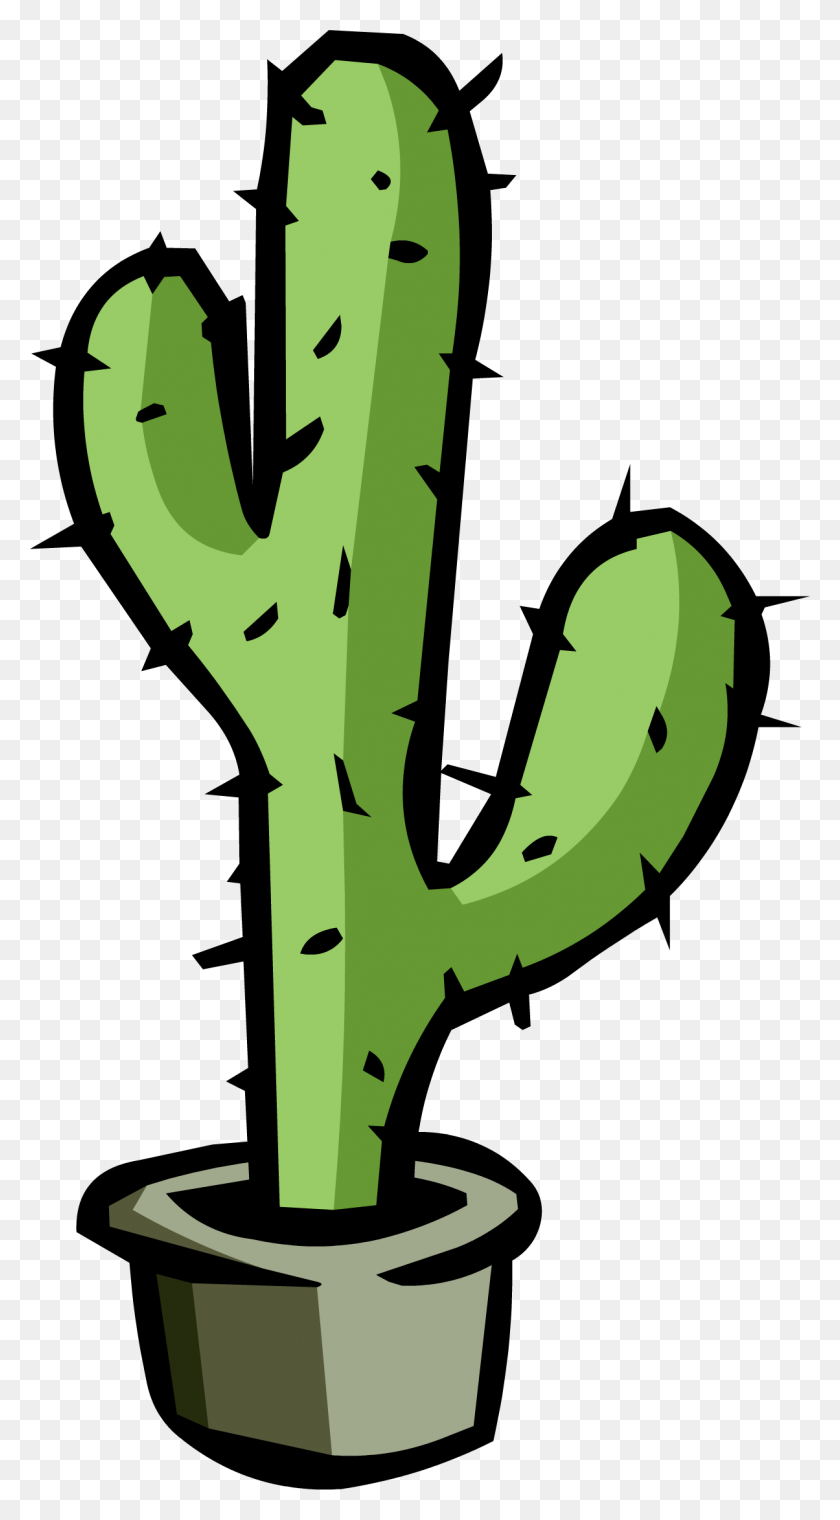 1204x2255 Descargar Cactus Clipart Cactus Dibujo Cactus Flor Clipart Gratis - Cactus Clipart